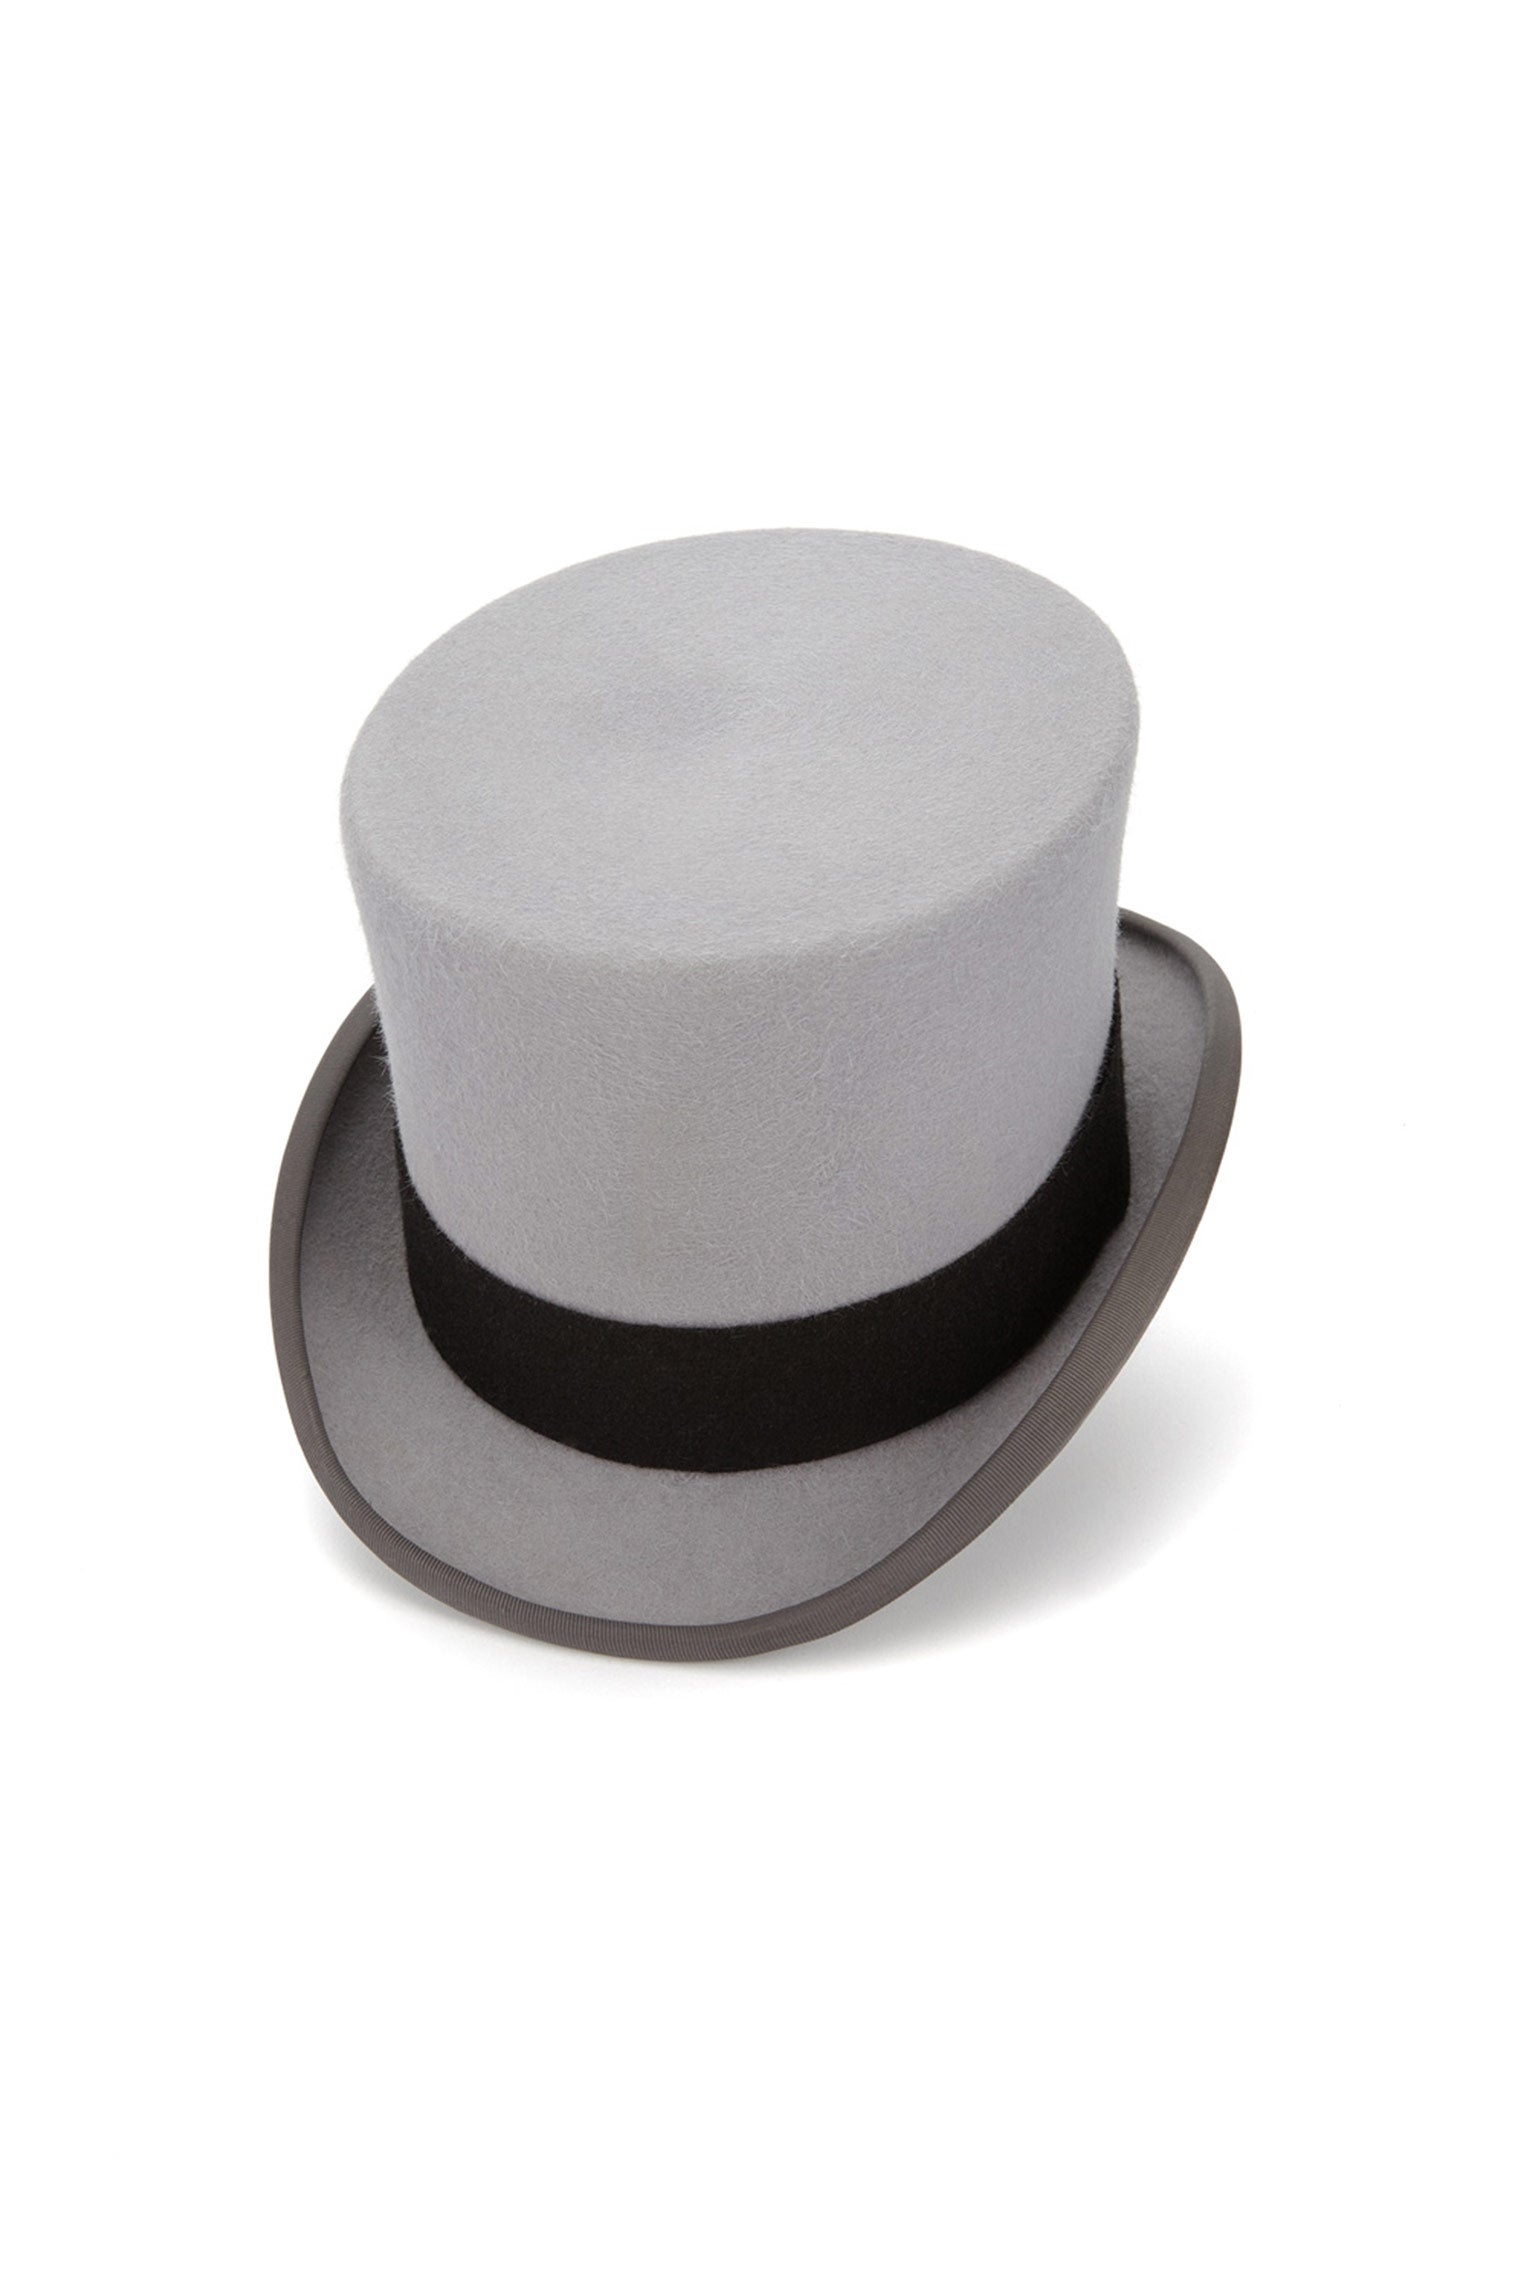 Ascot Top Hat - Men's Hats - Lock & Co. Hatters London UK